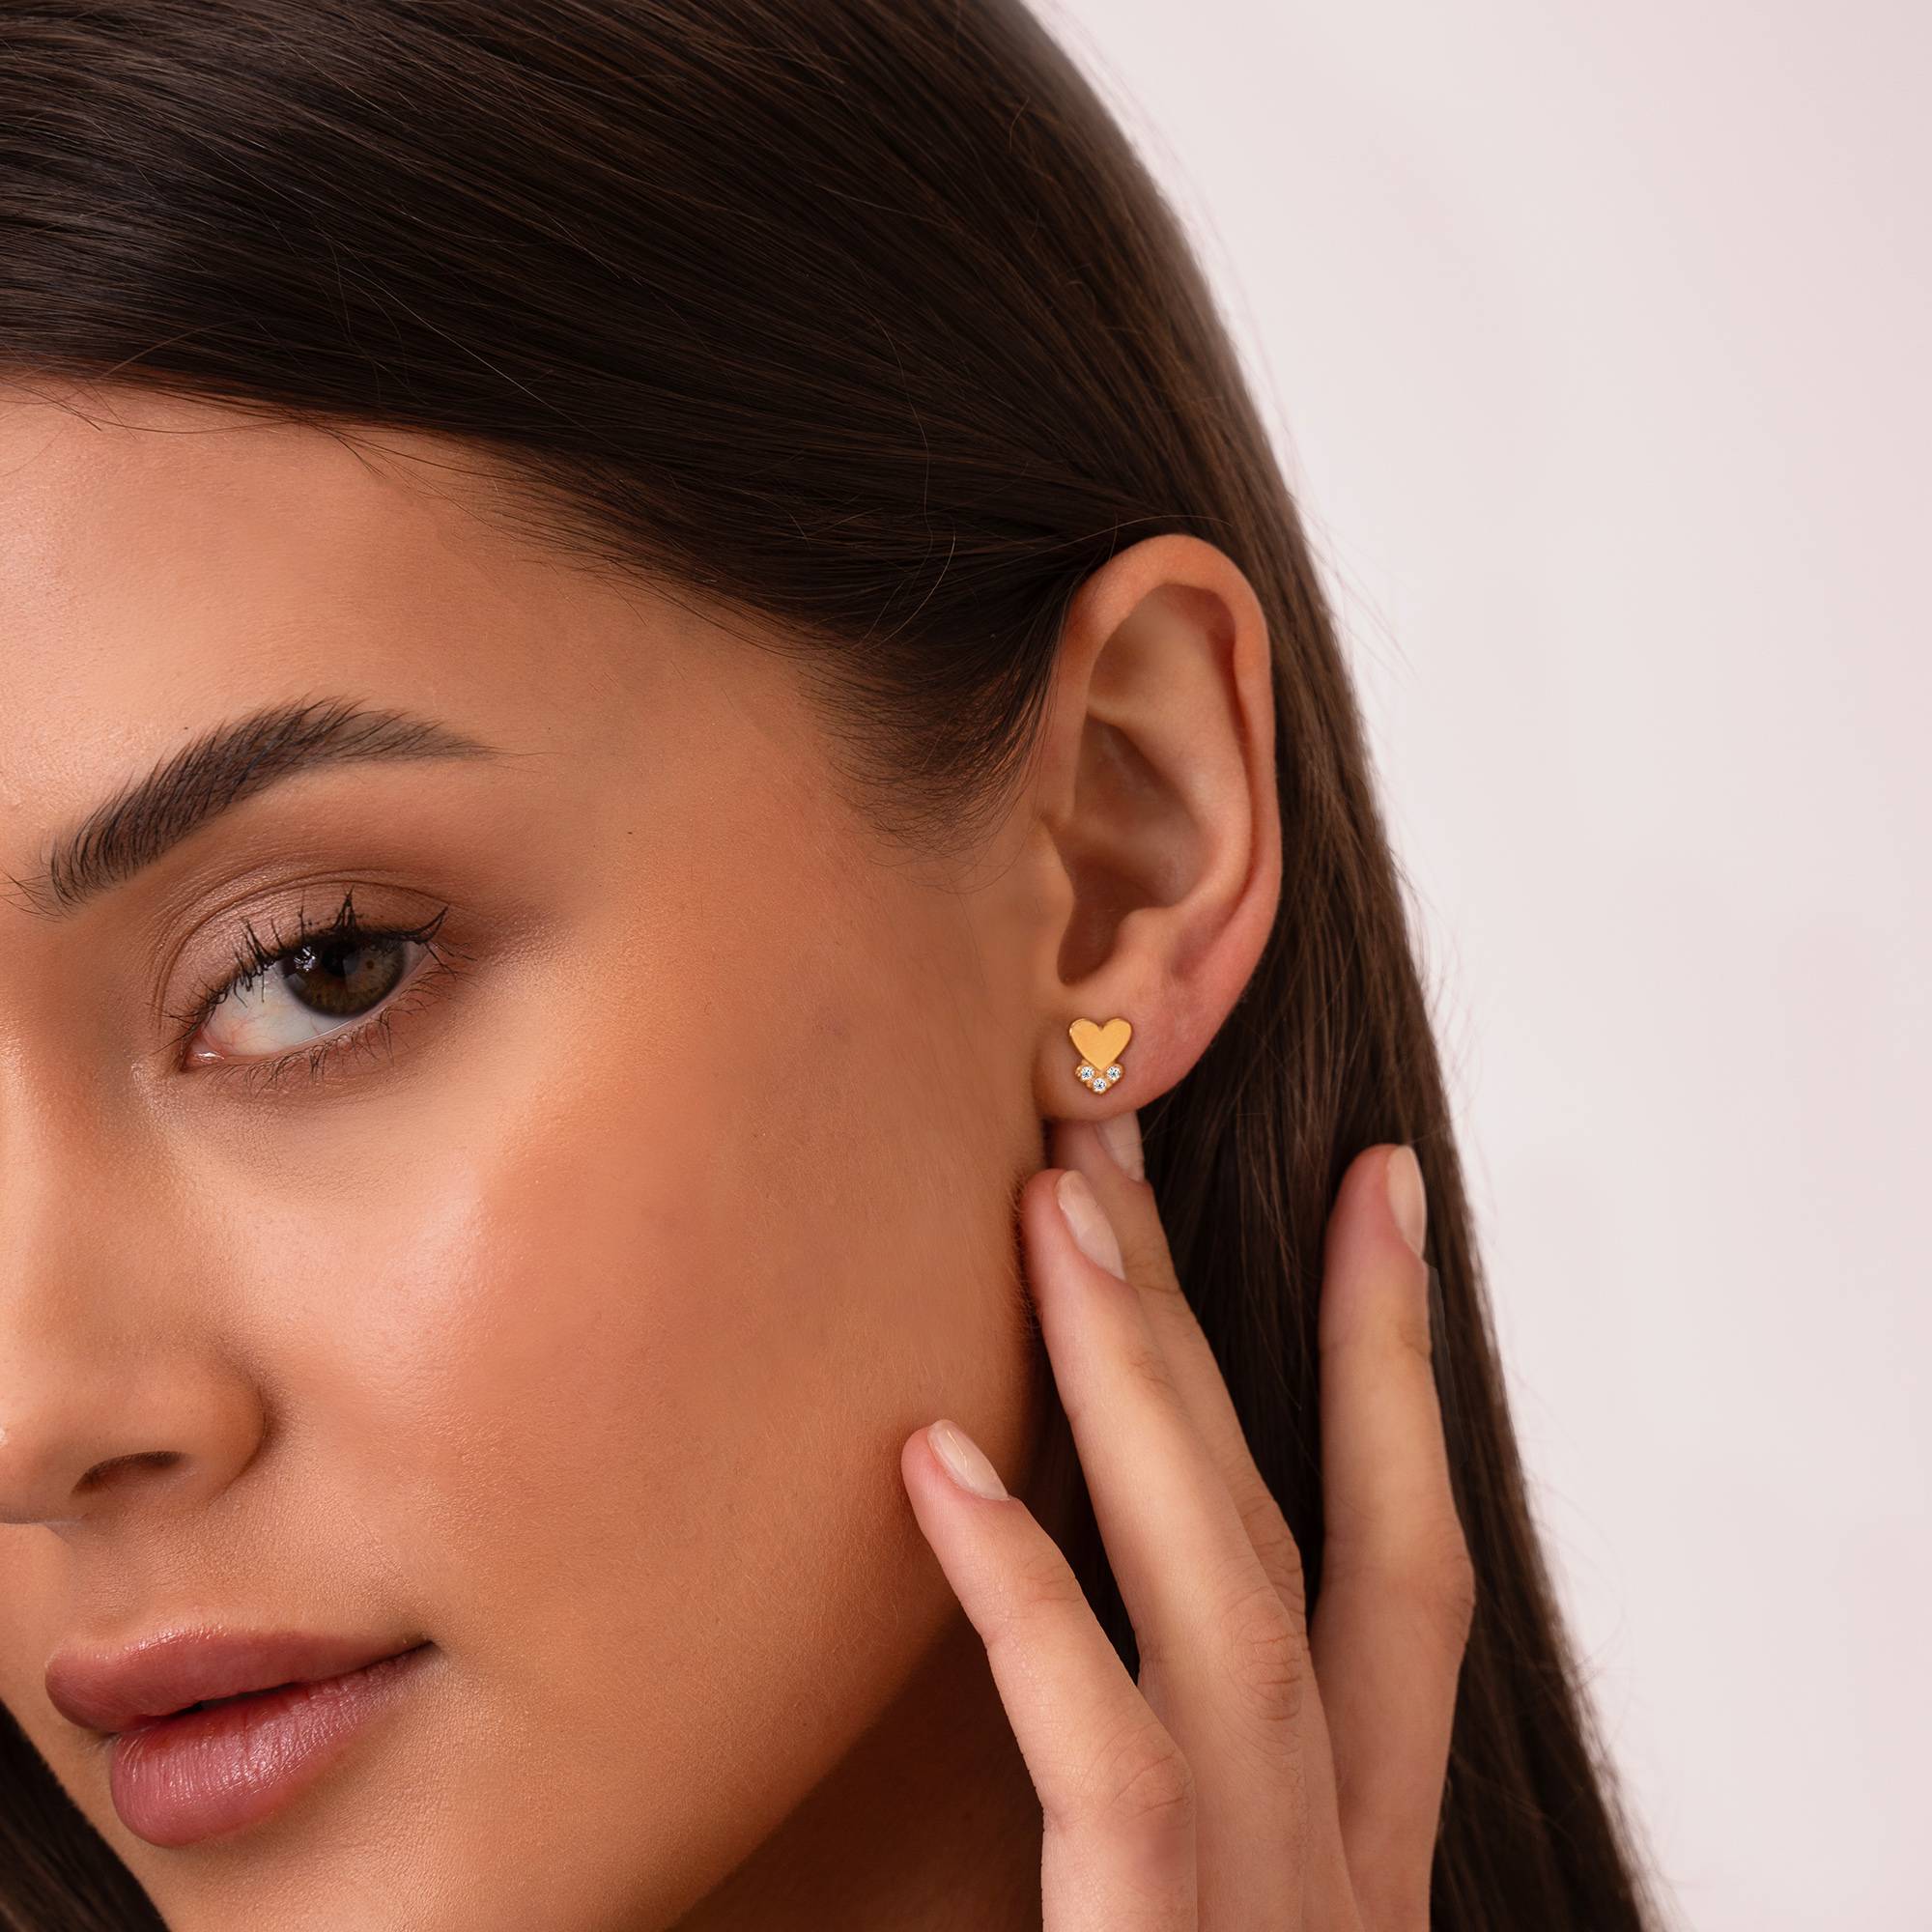 Dakota Heart Earrings with Diamonds in 18ct Gold Vermeil-4 product photo